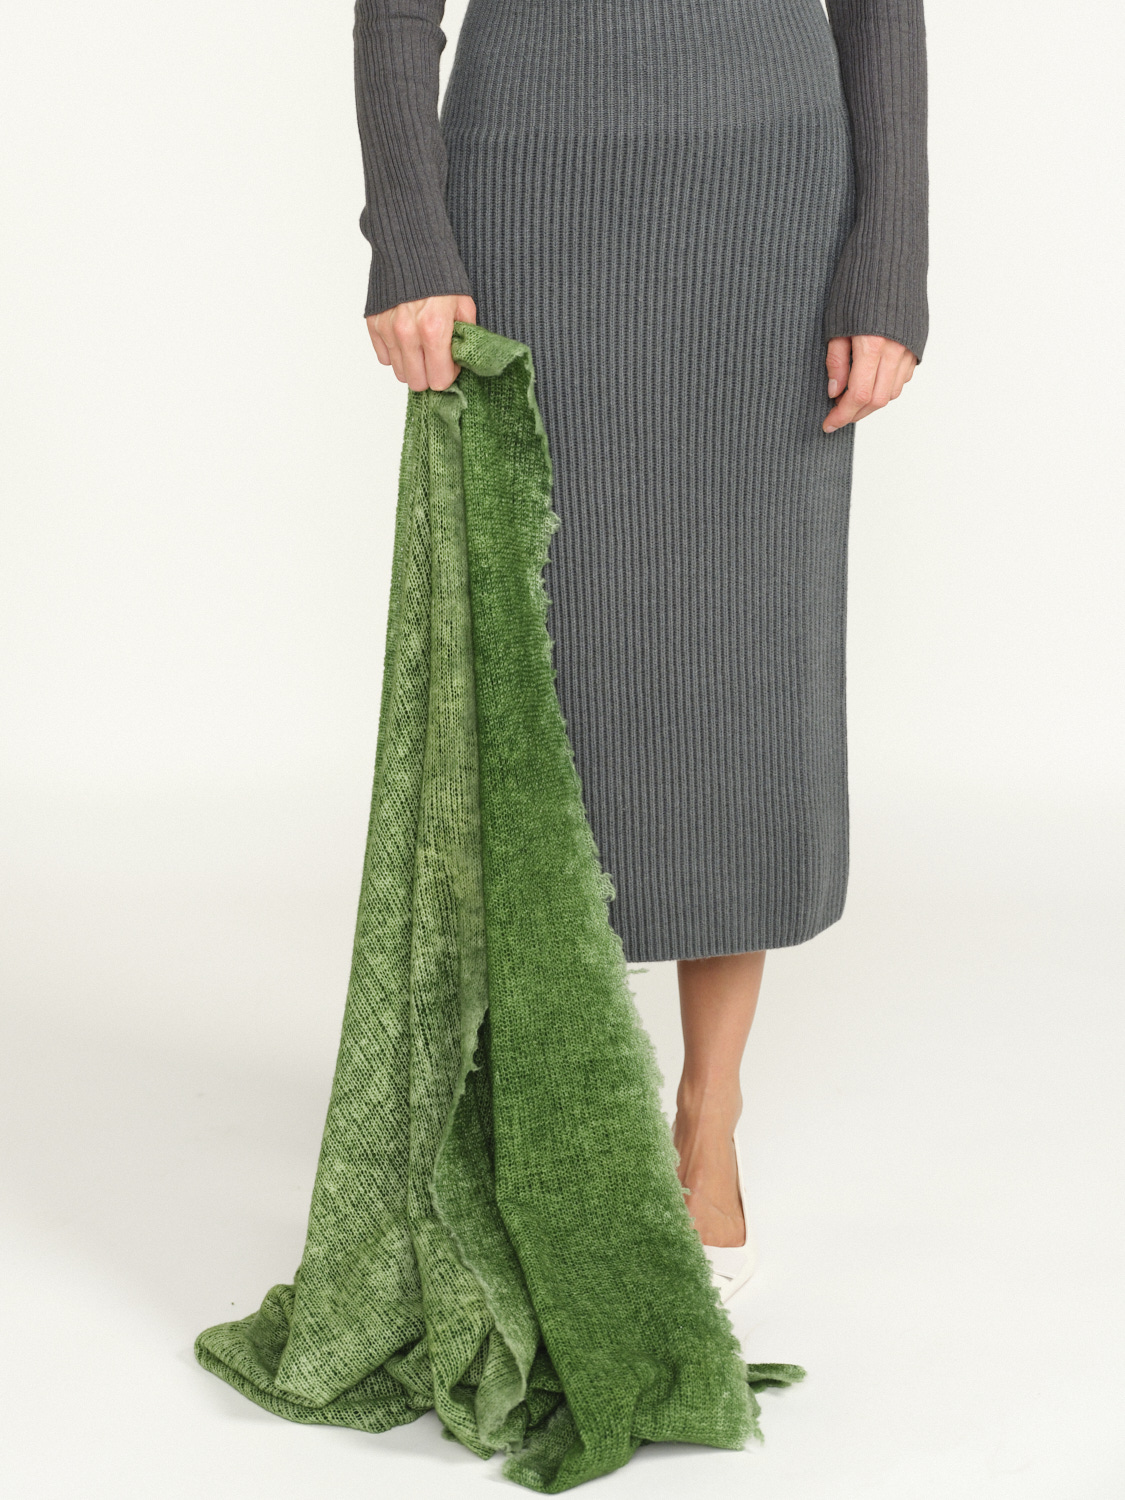 Avant Toi Oversized Scarf - Merino cashmere scarf in oversize design  green One Size